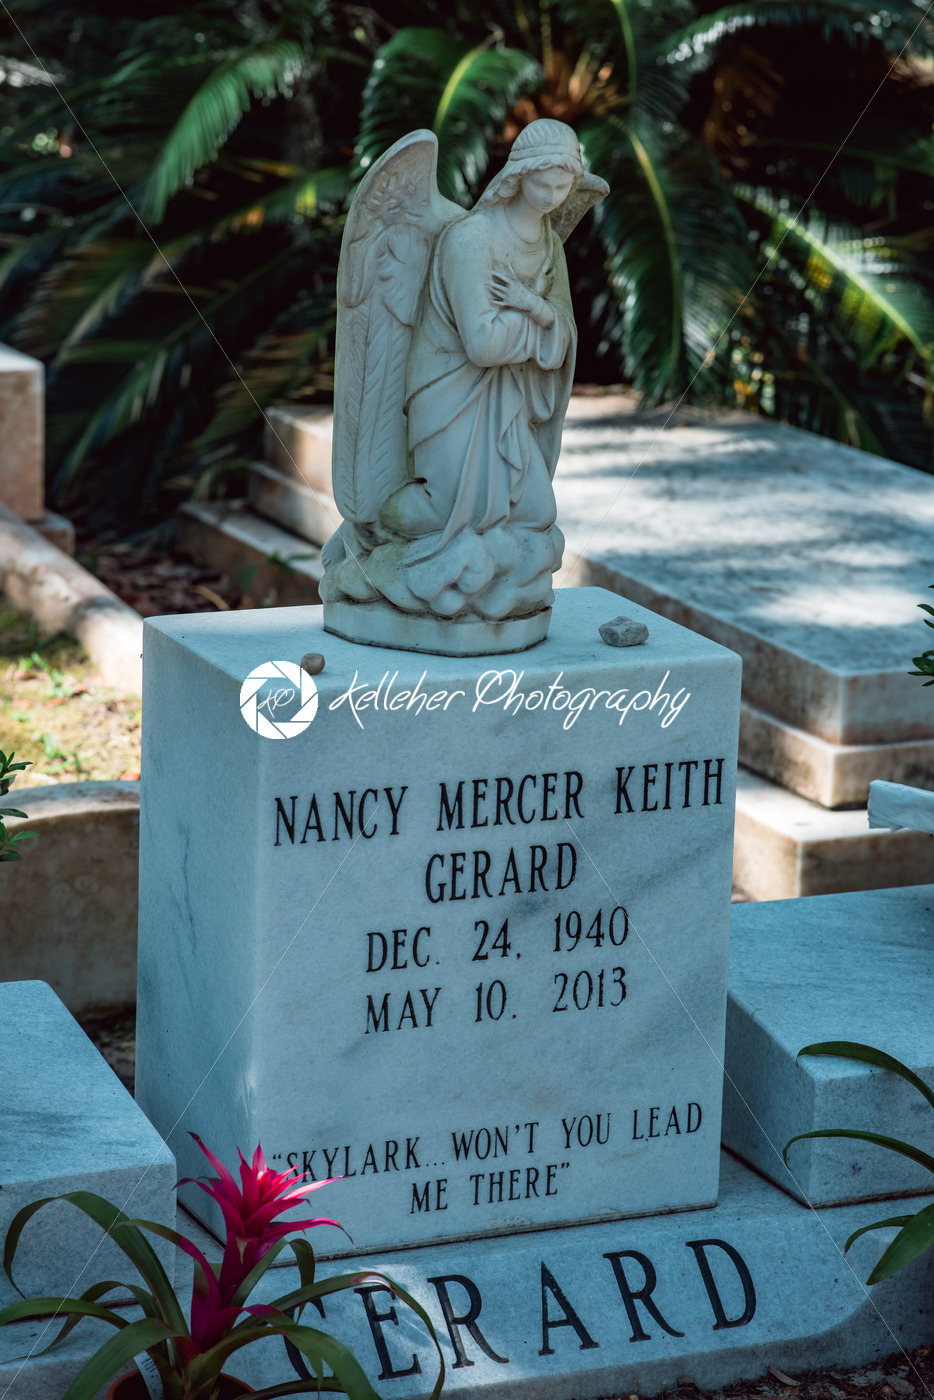 Nancy Mercer Keith Gerard Cemetery Statuary Statue Bonaventure Cemetery Savannah Georgia - Kelleher Photography Store